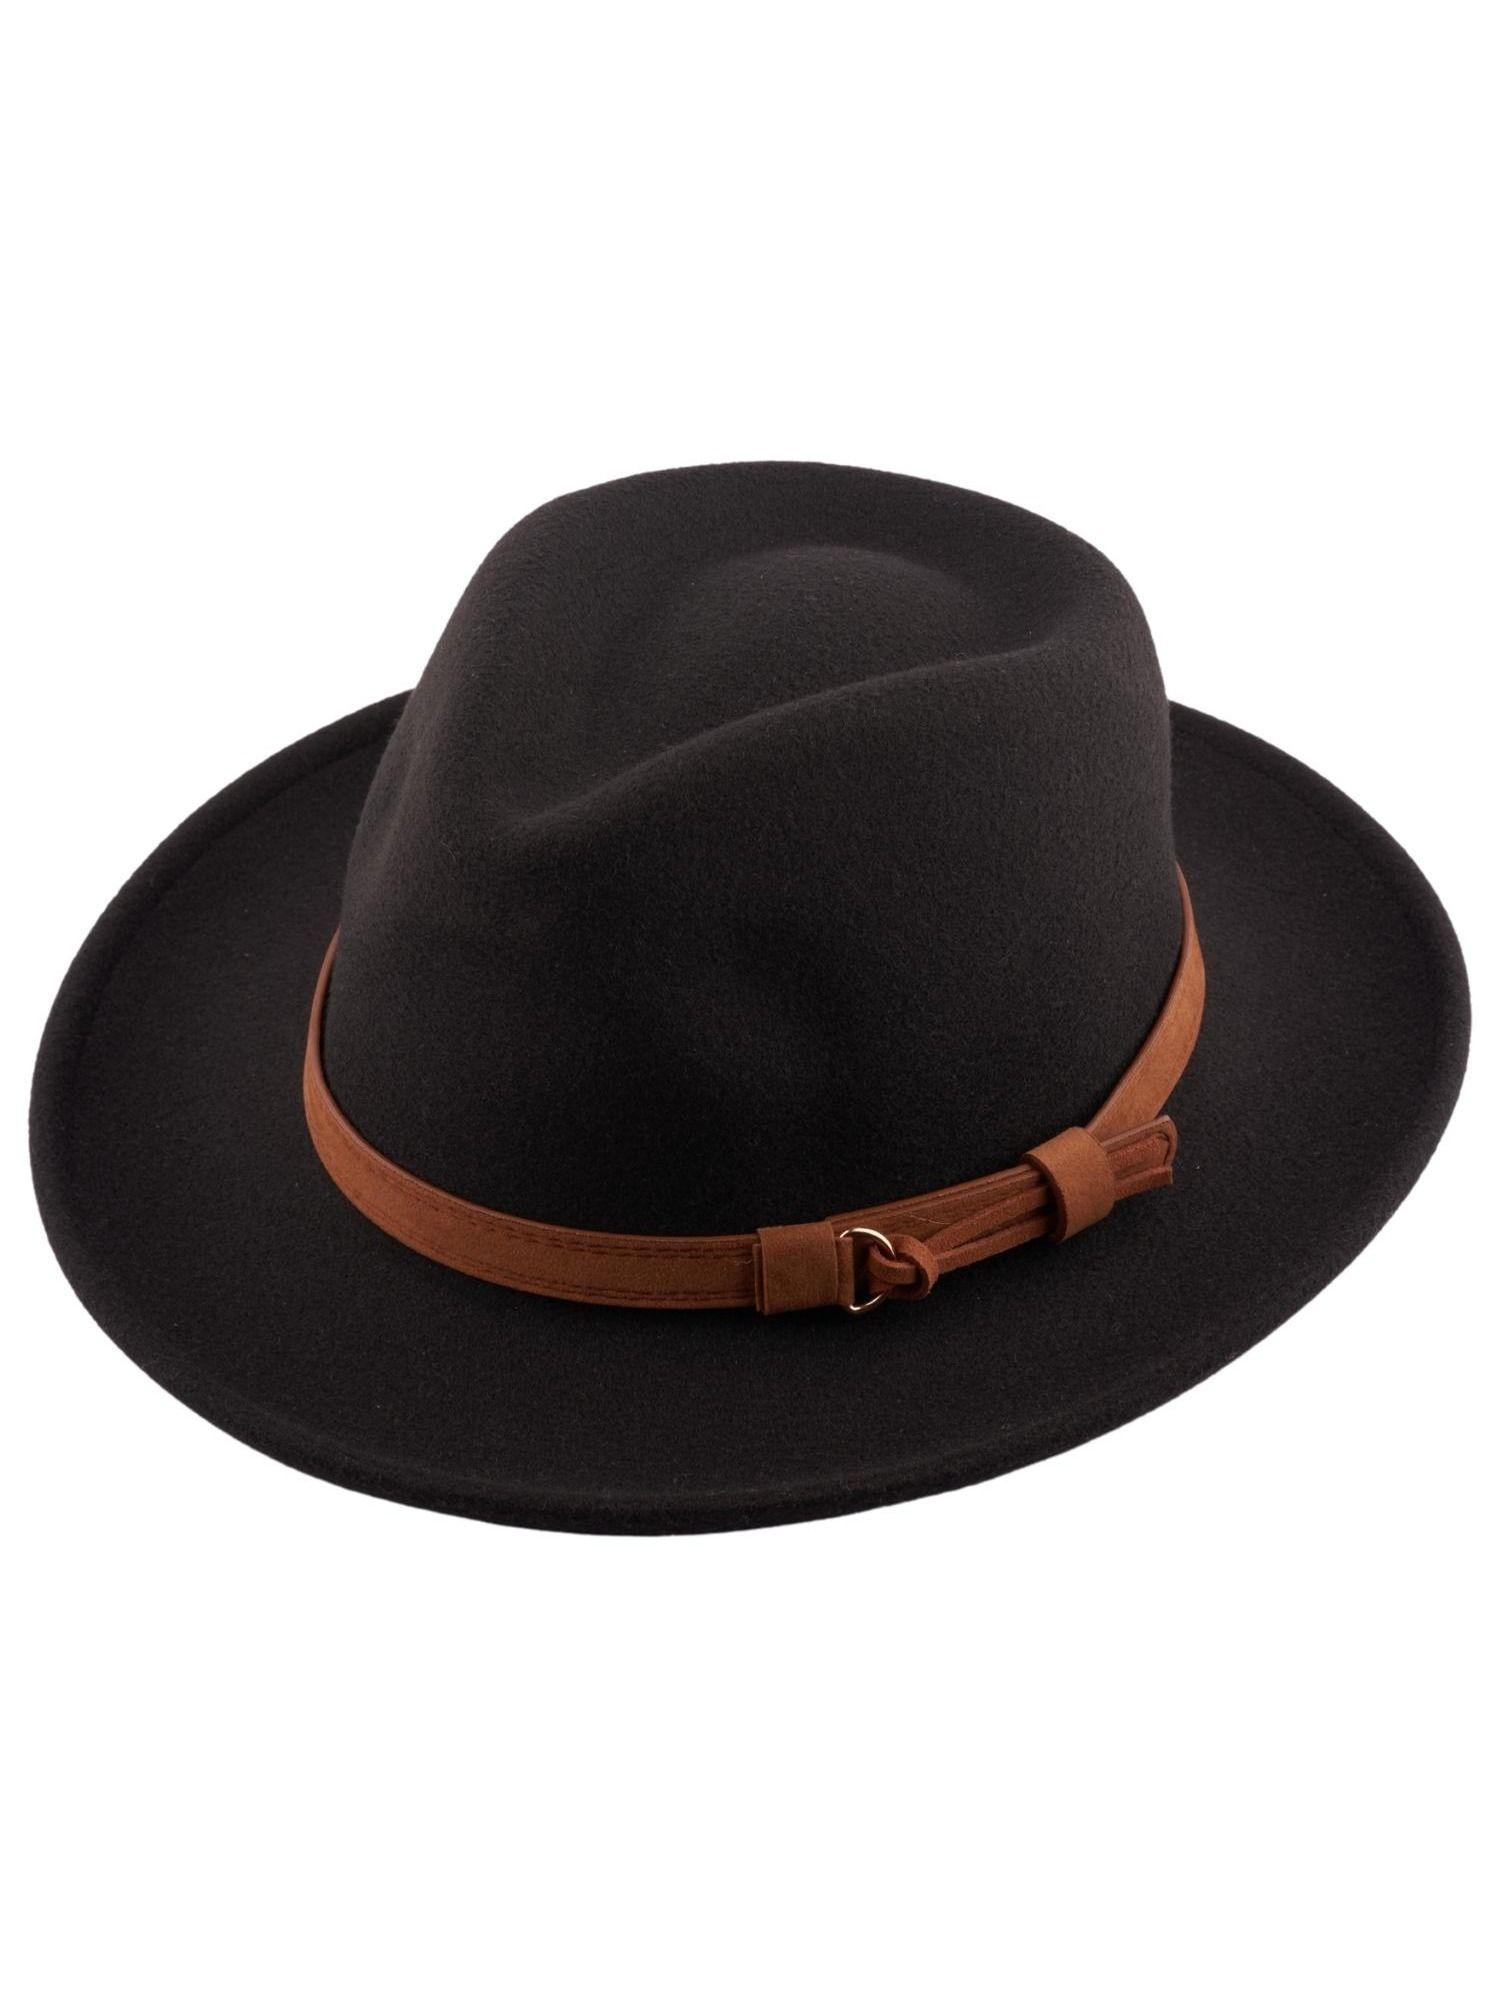 homburg solid black fedora hat